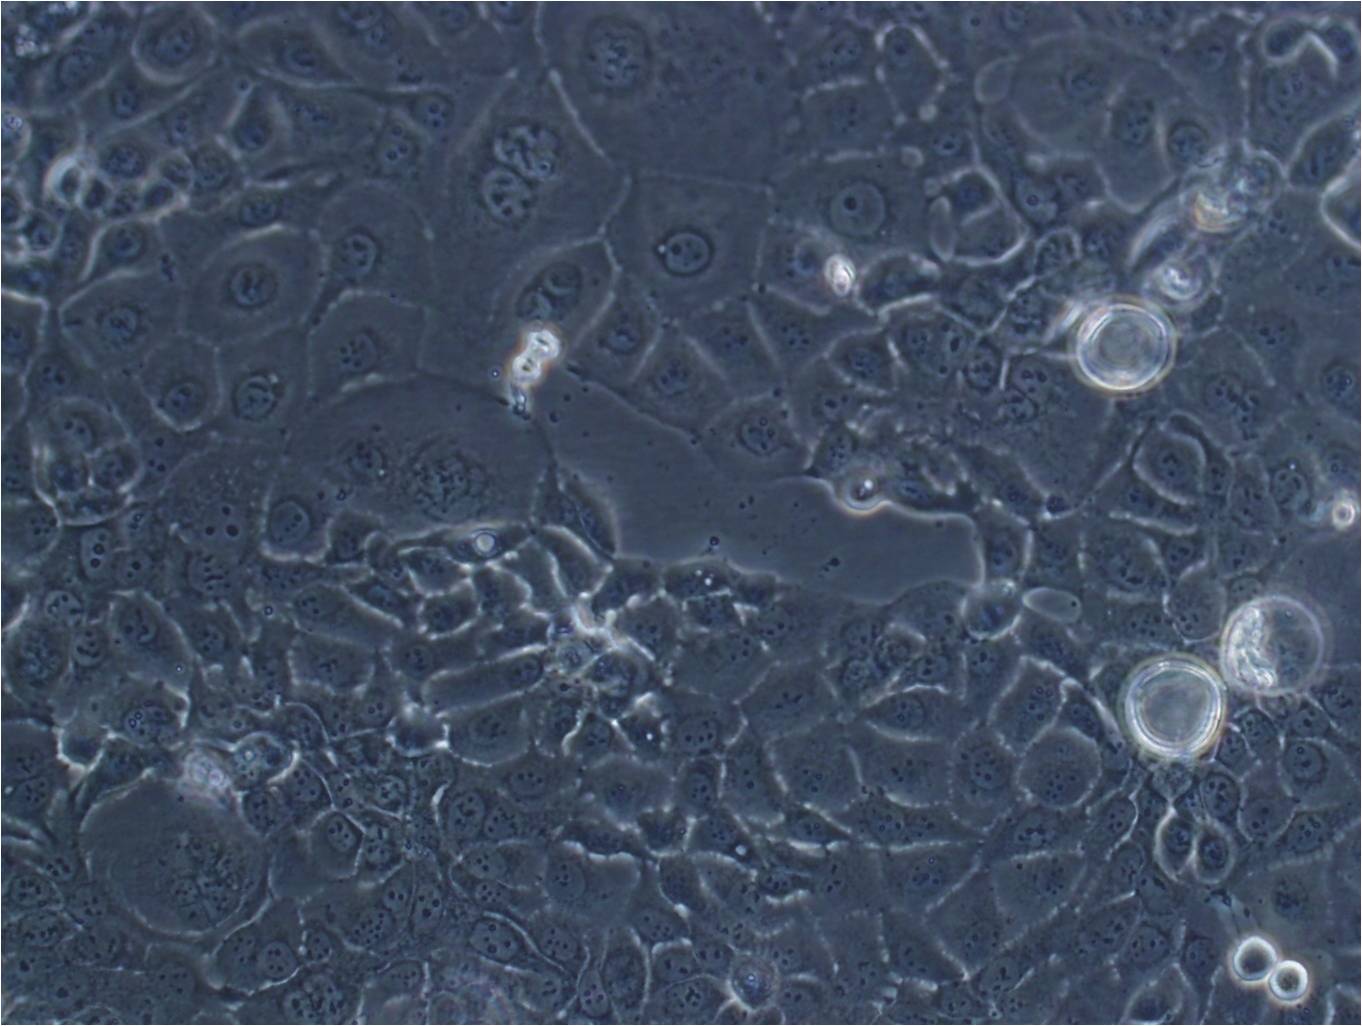 JCA-1 epithelioid cells人前列腺癌细胞系,JCA-1 epithelioid cells